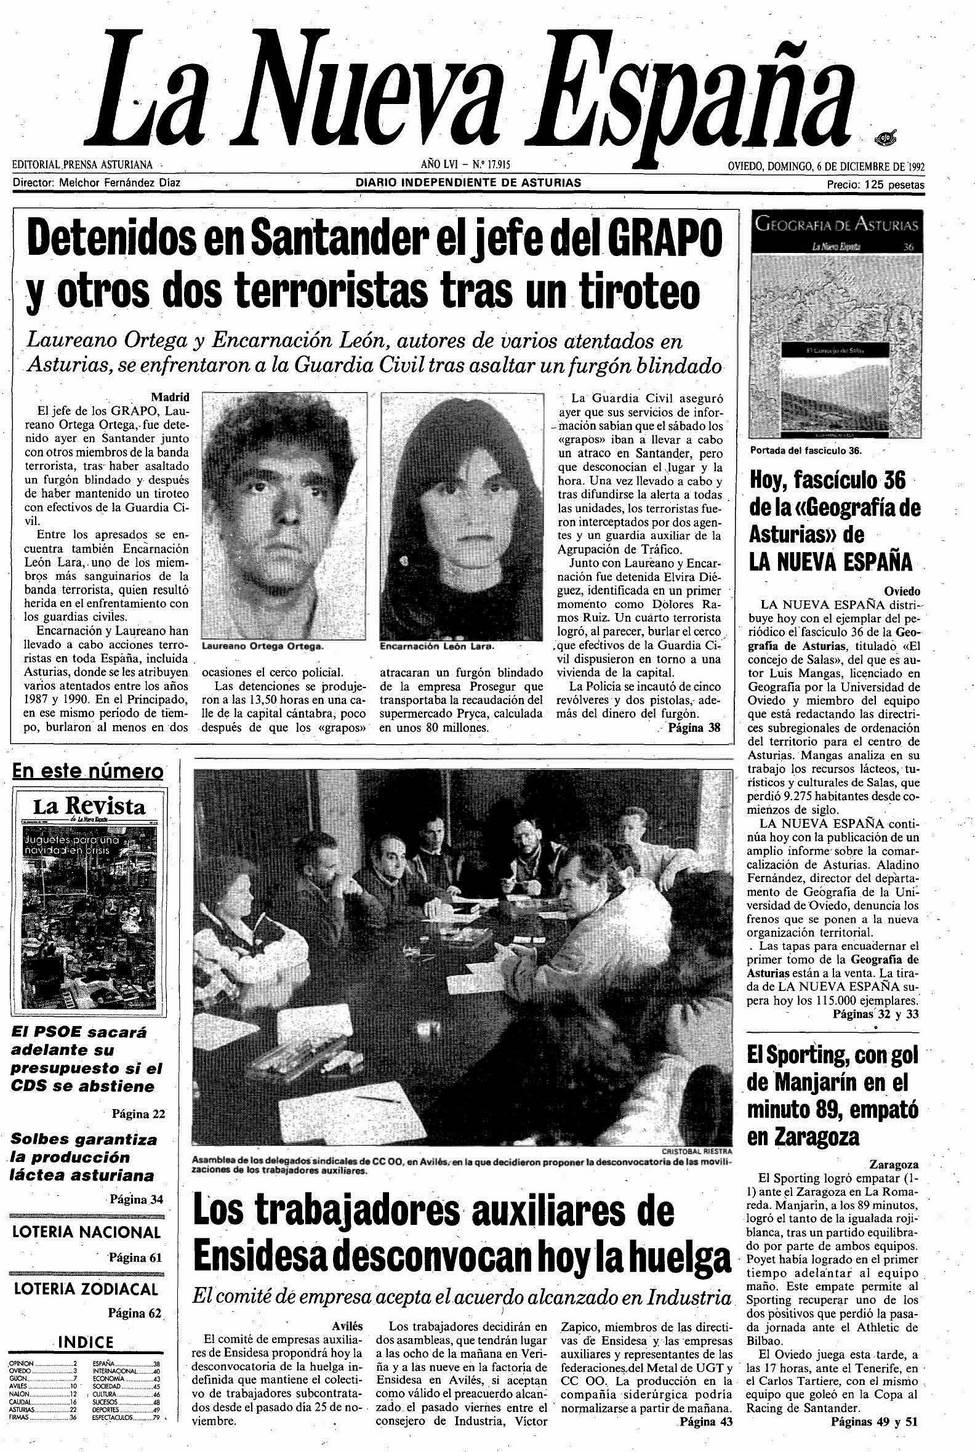 Portada del Domingo, 6 de Diciembre de 1992